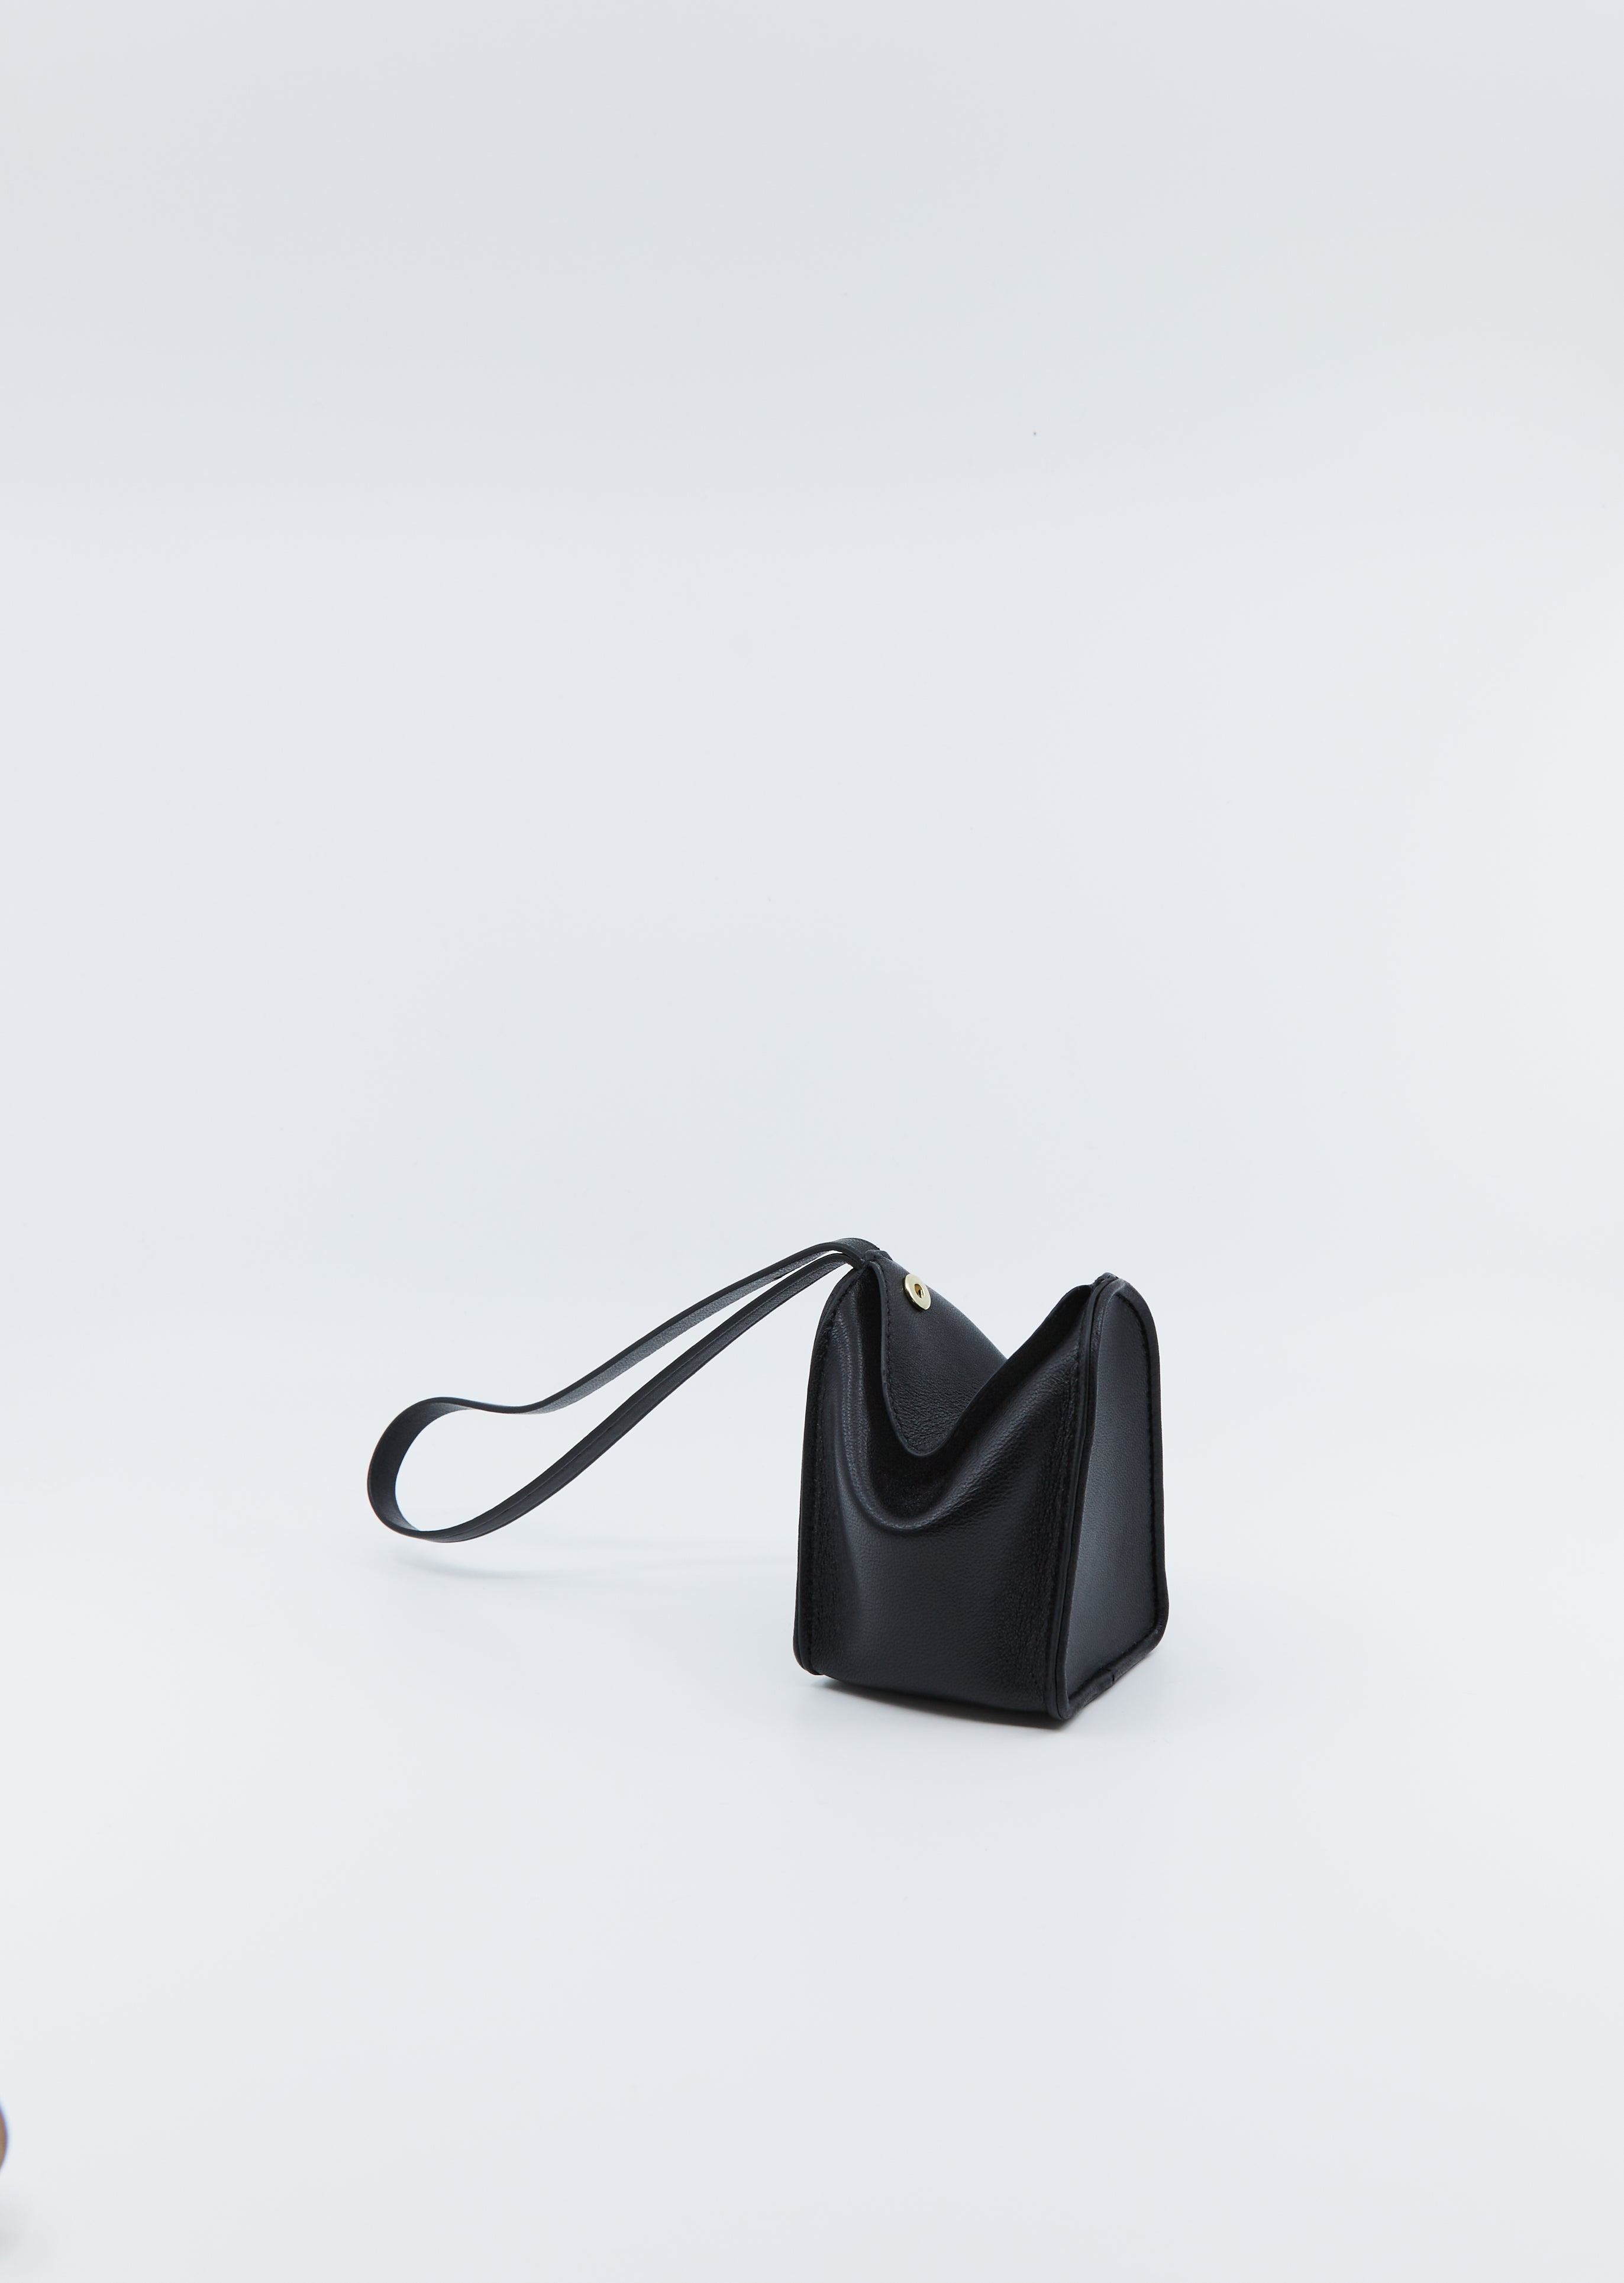 Guy Laroche wallet coins bag black 4 x 3 – Trendy Ground